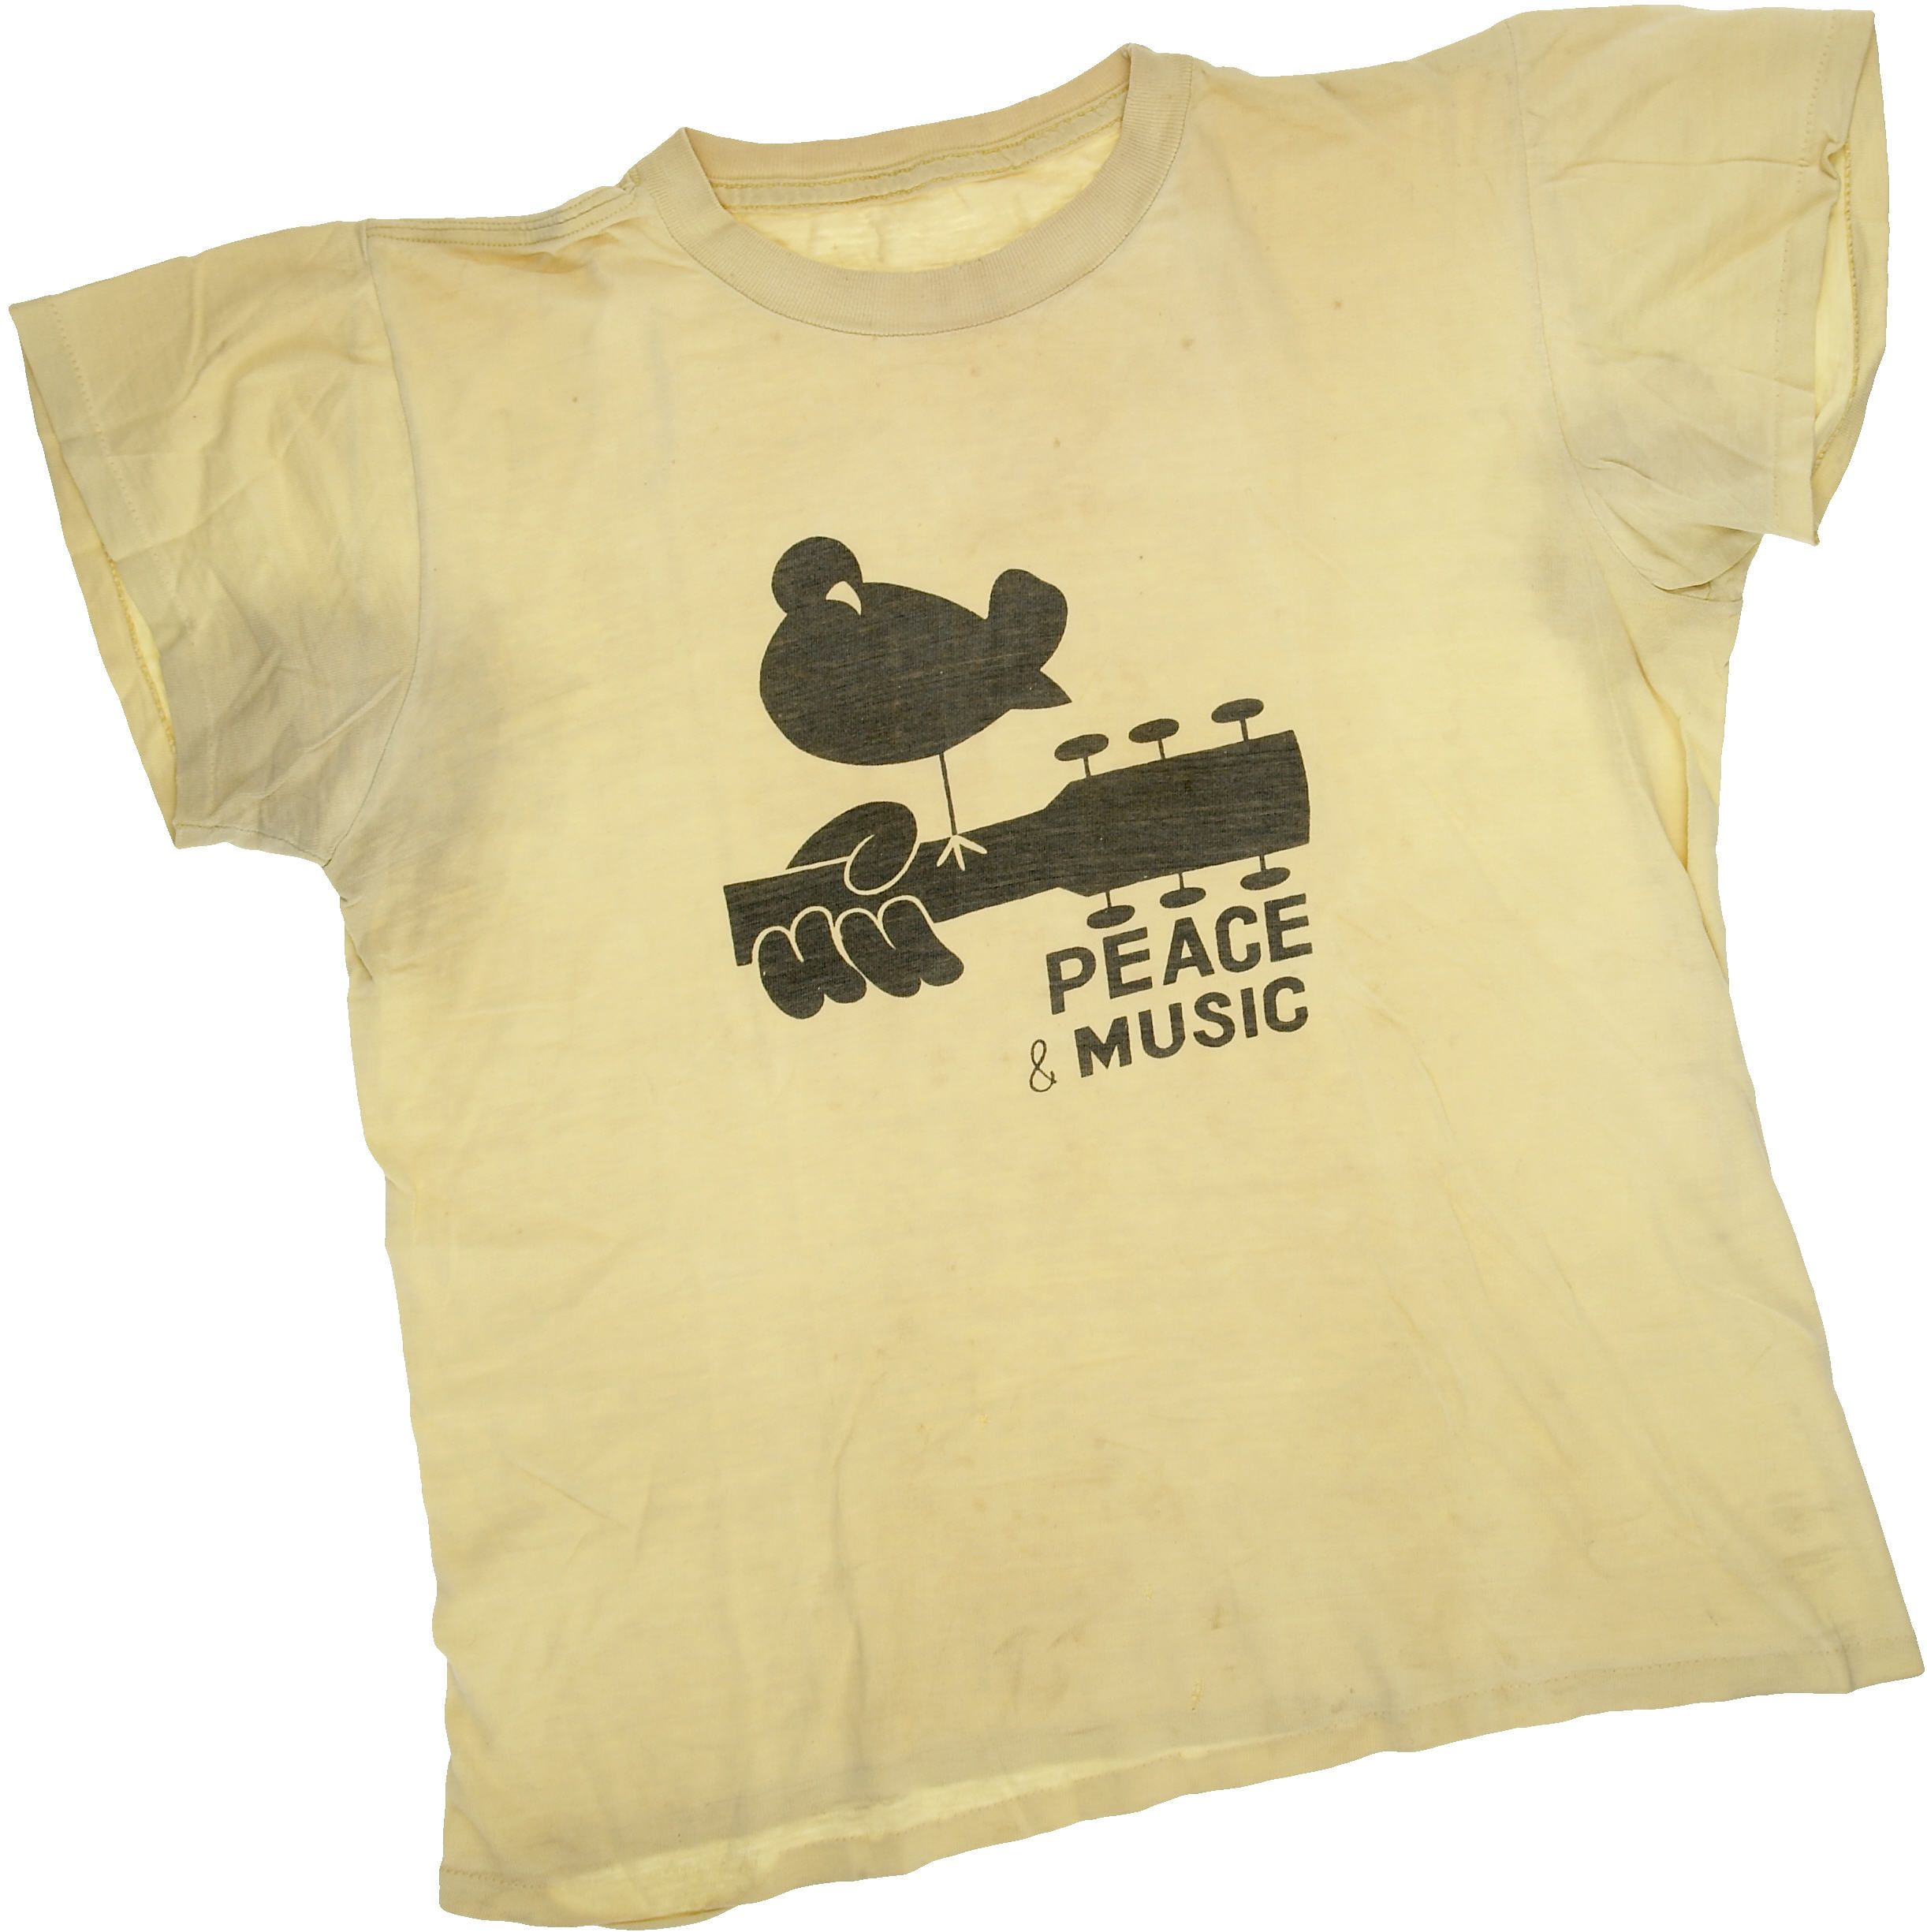 Very Rare Original Woodstock Concert T-shirt.